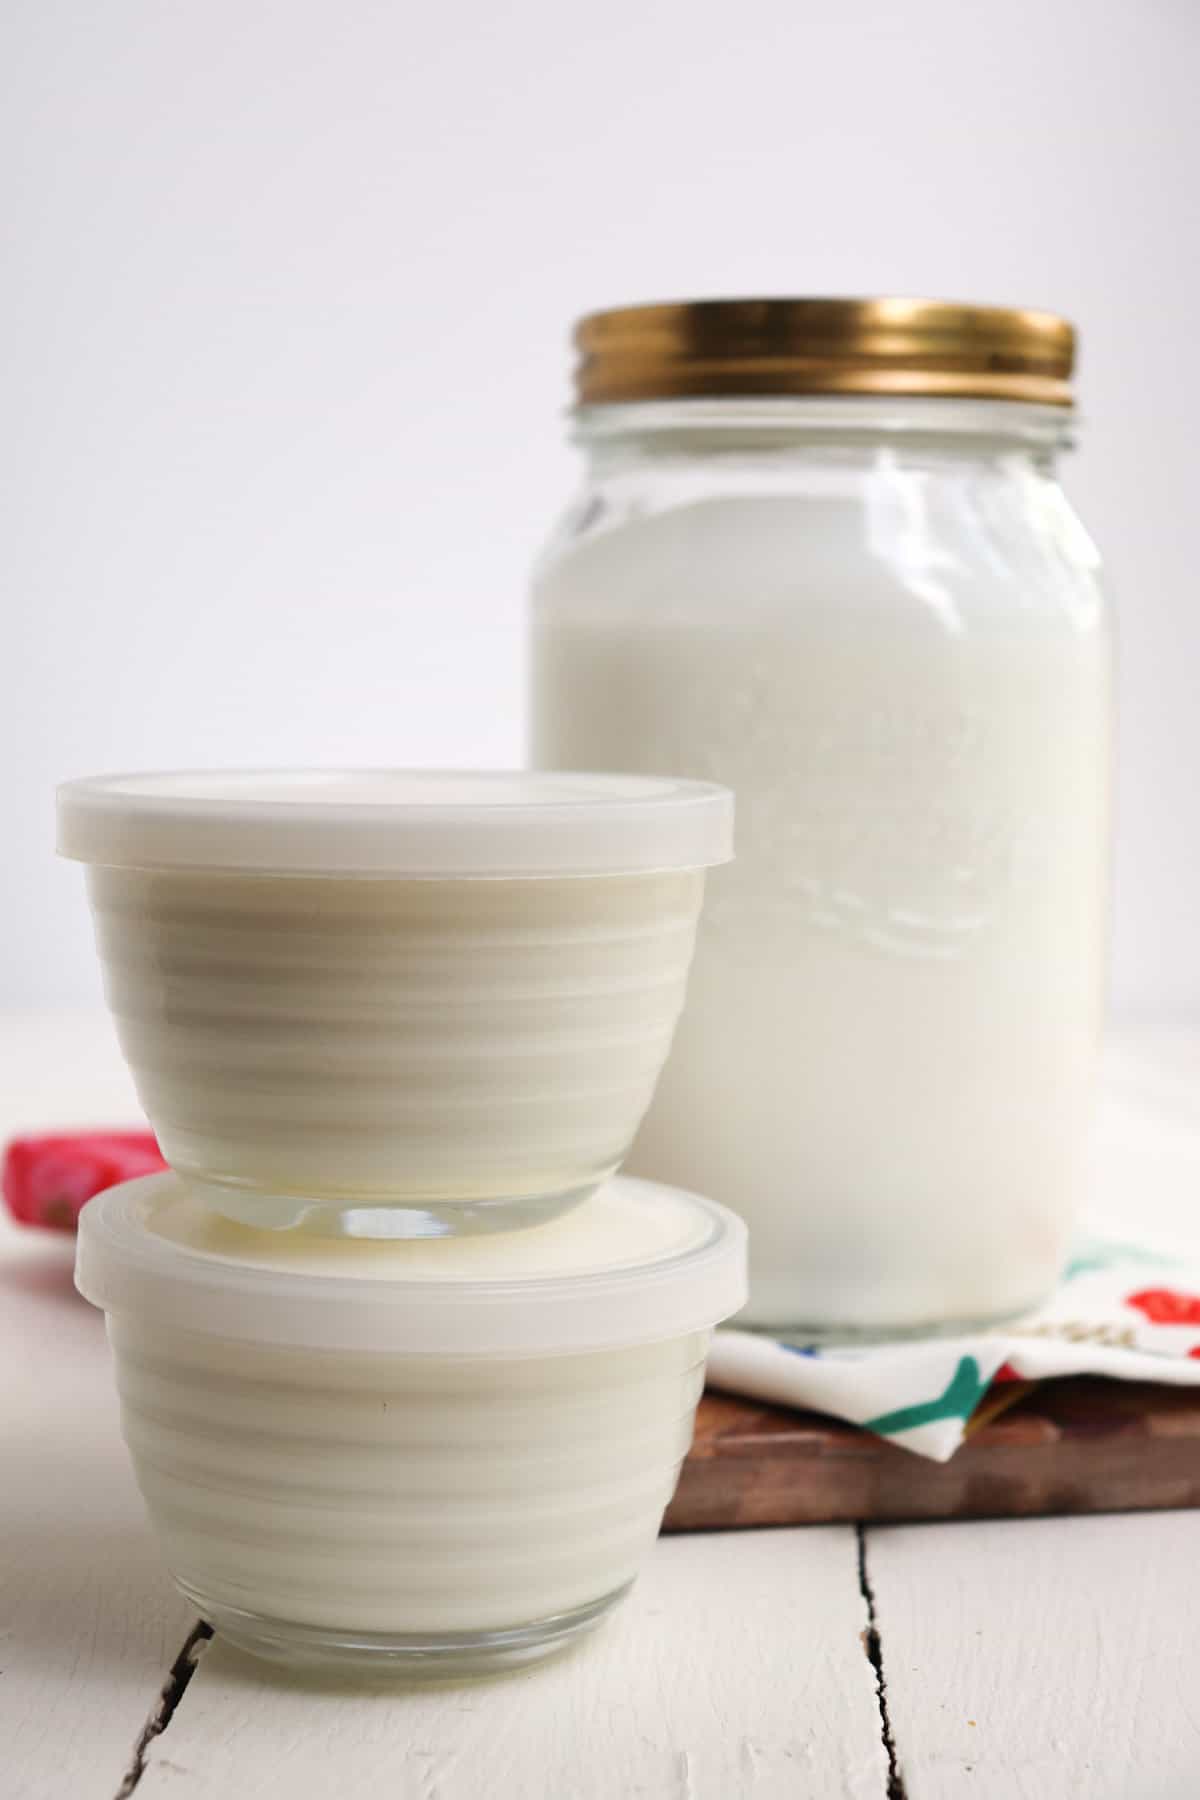 yogurt shown in different sized jars.